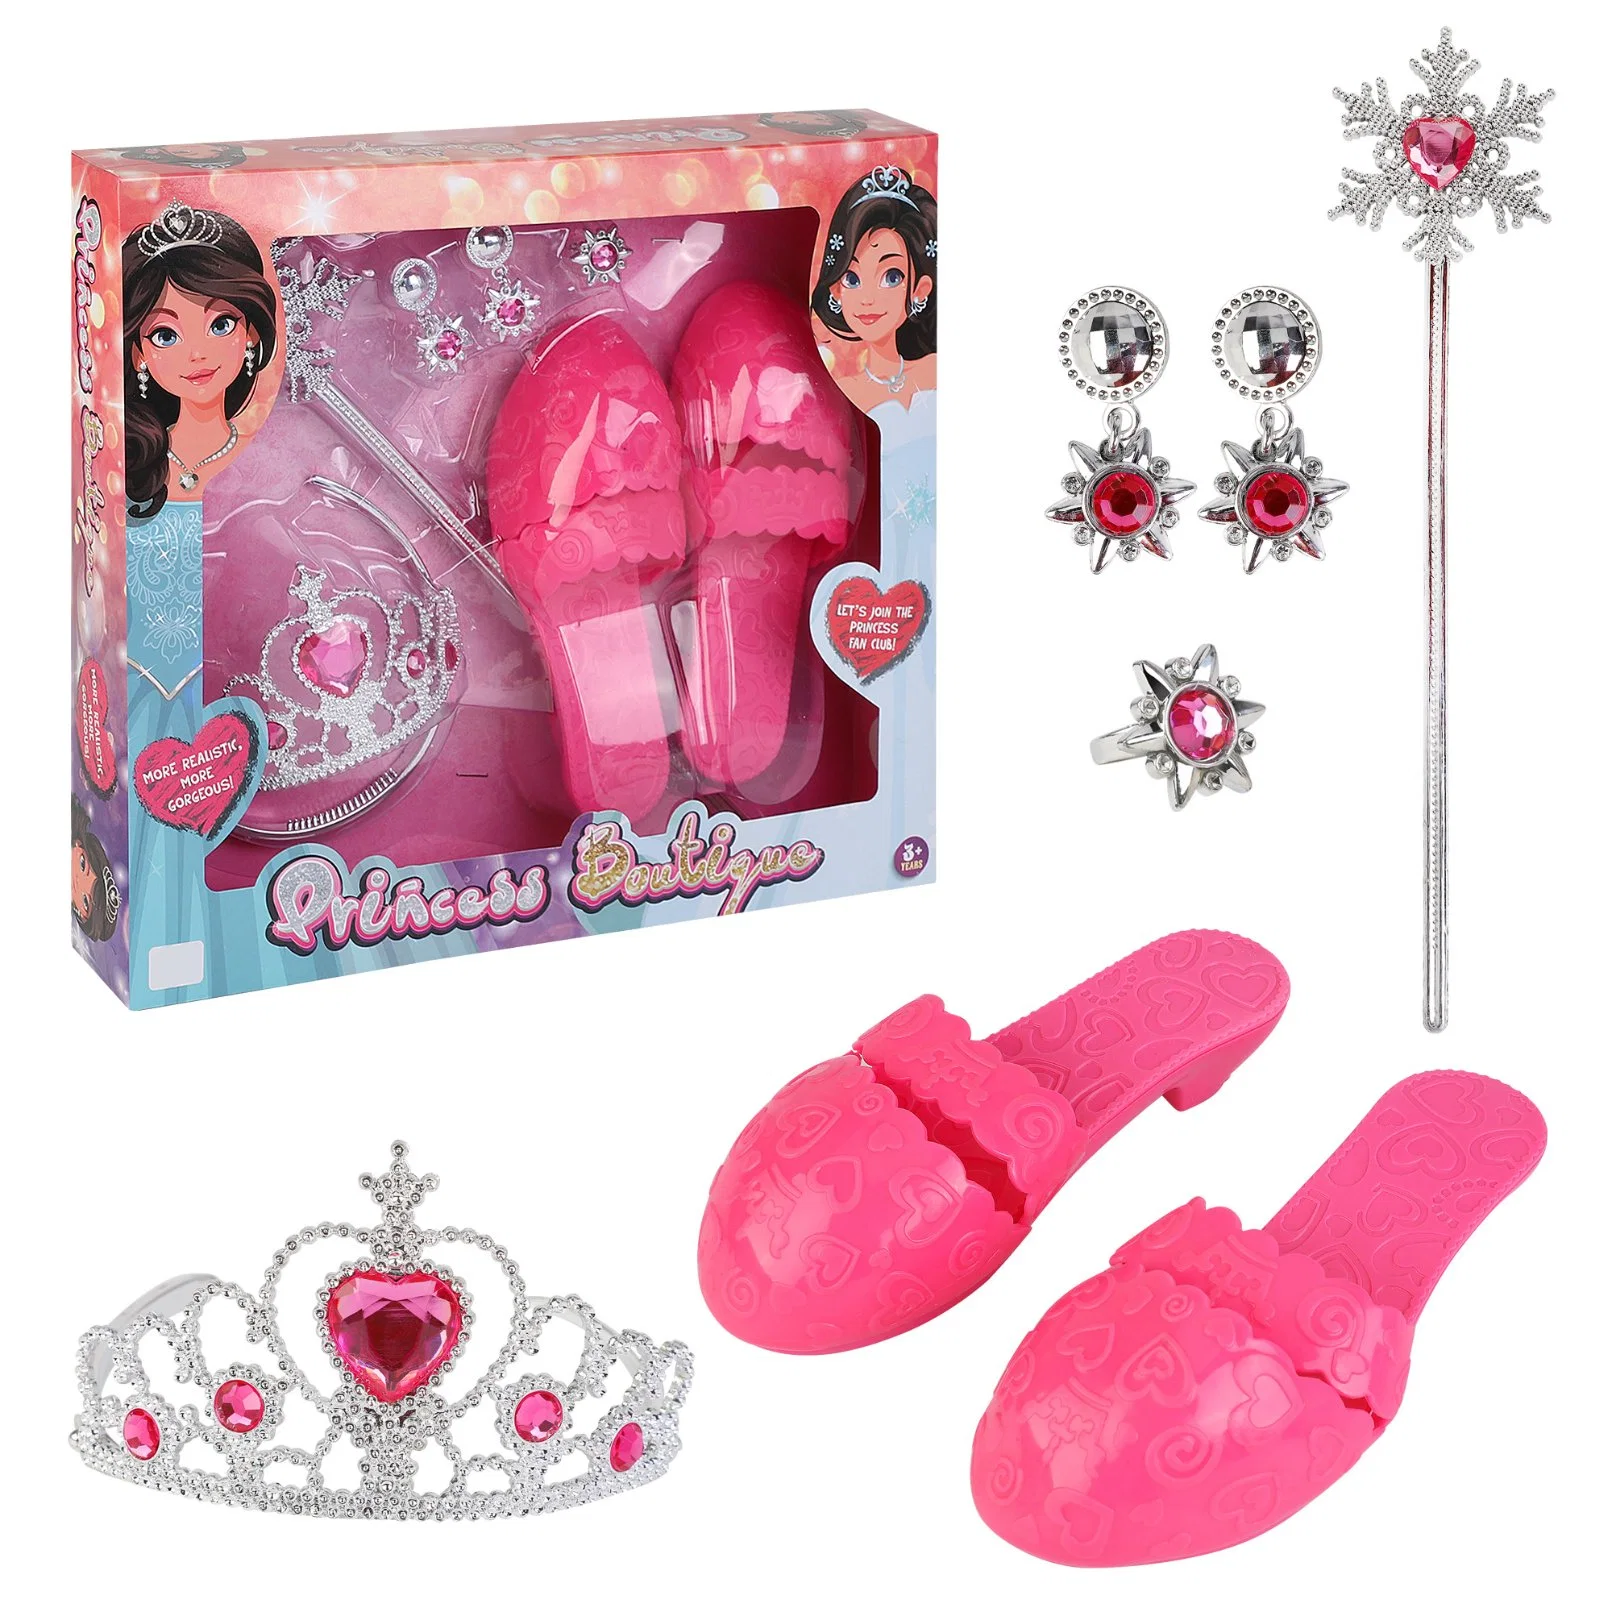 Children Girls Surprise Gift Fashion Dress up Kit Elegant Heels Shoes Crown Rings Earrings Kids Wand Princess Role Play Toy Set